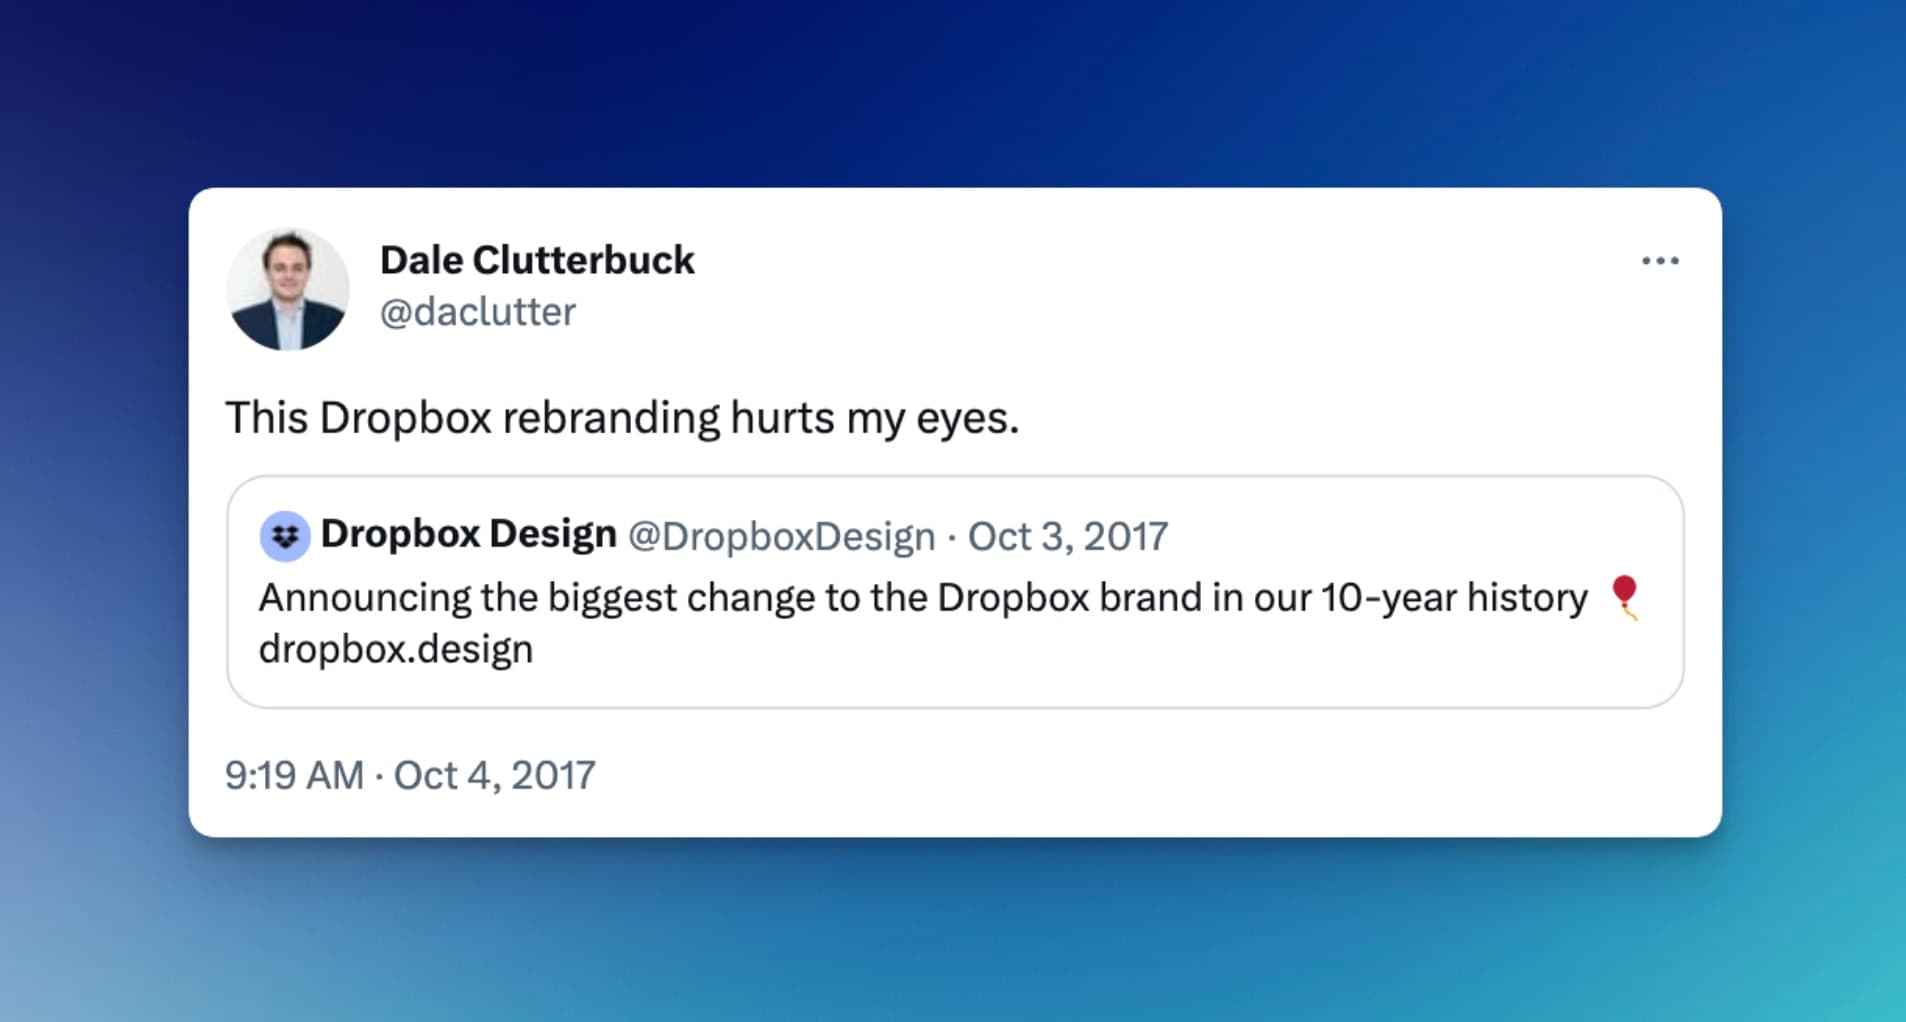 Dropbox Design